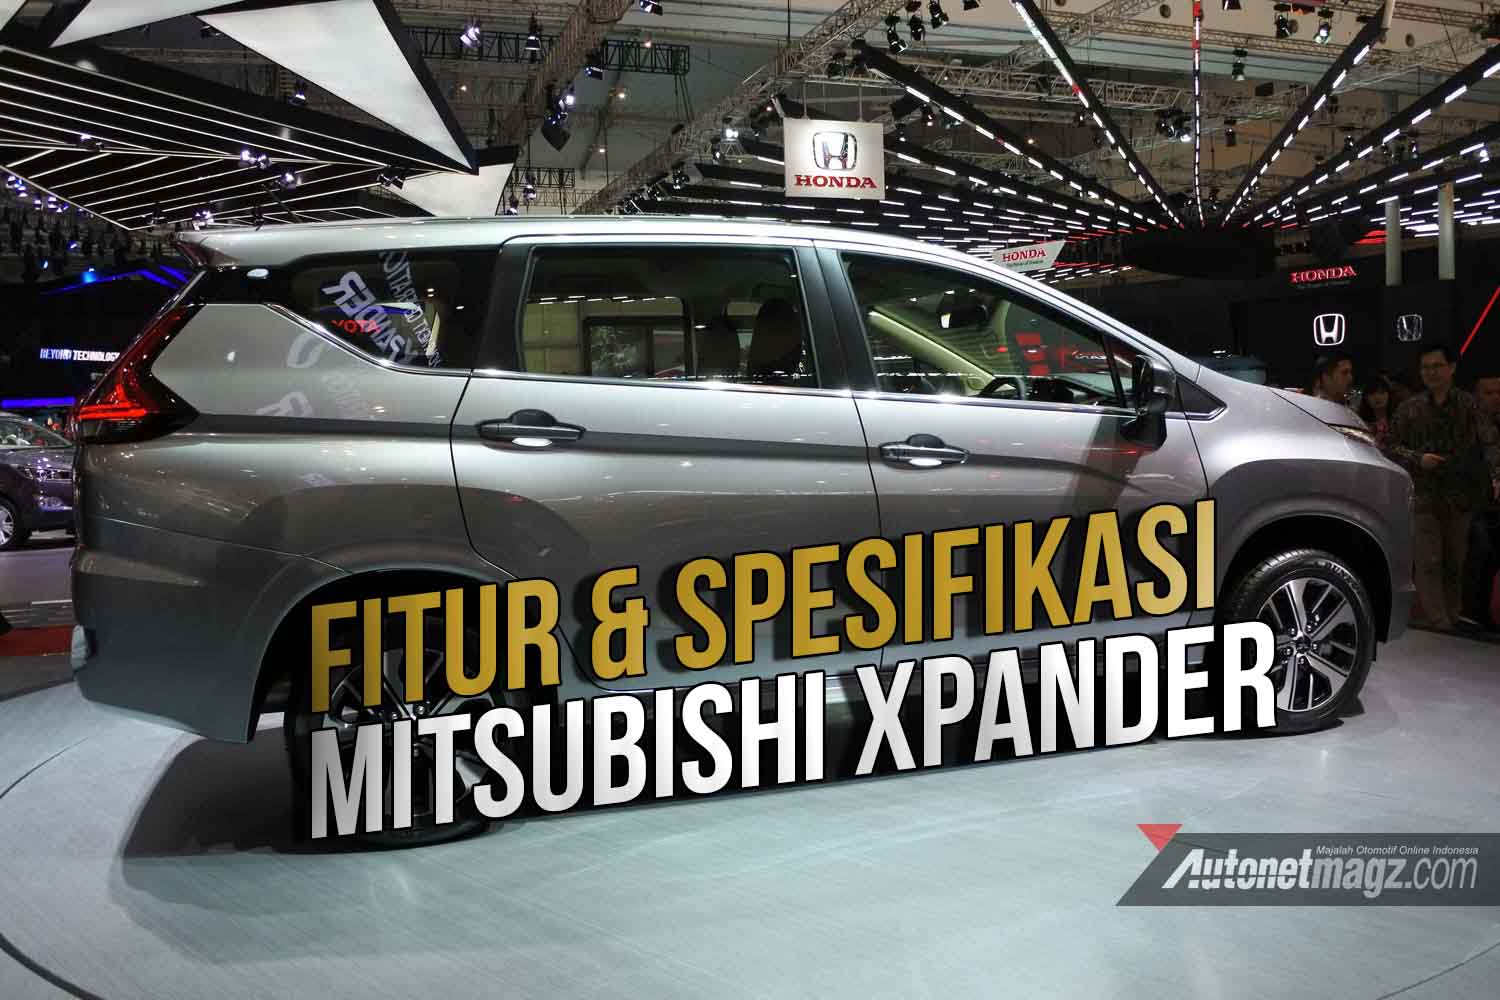 Fitur Mitsubishi Xpander AutonetMagz Review Mobil Dan Motor